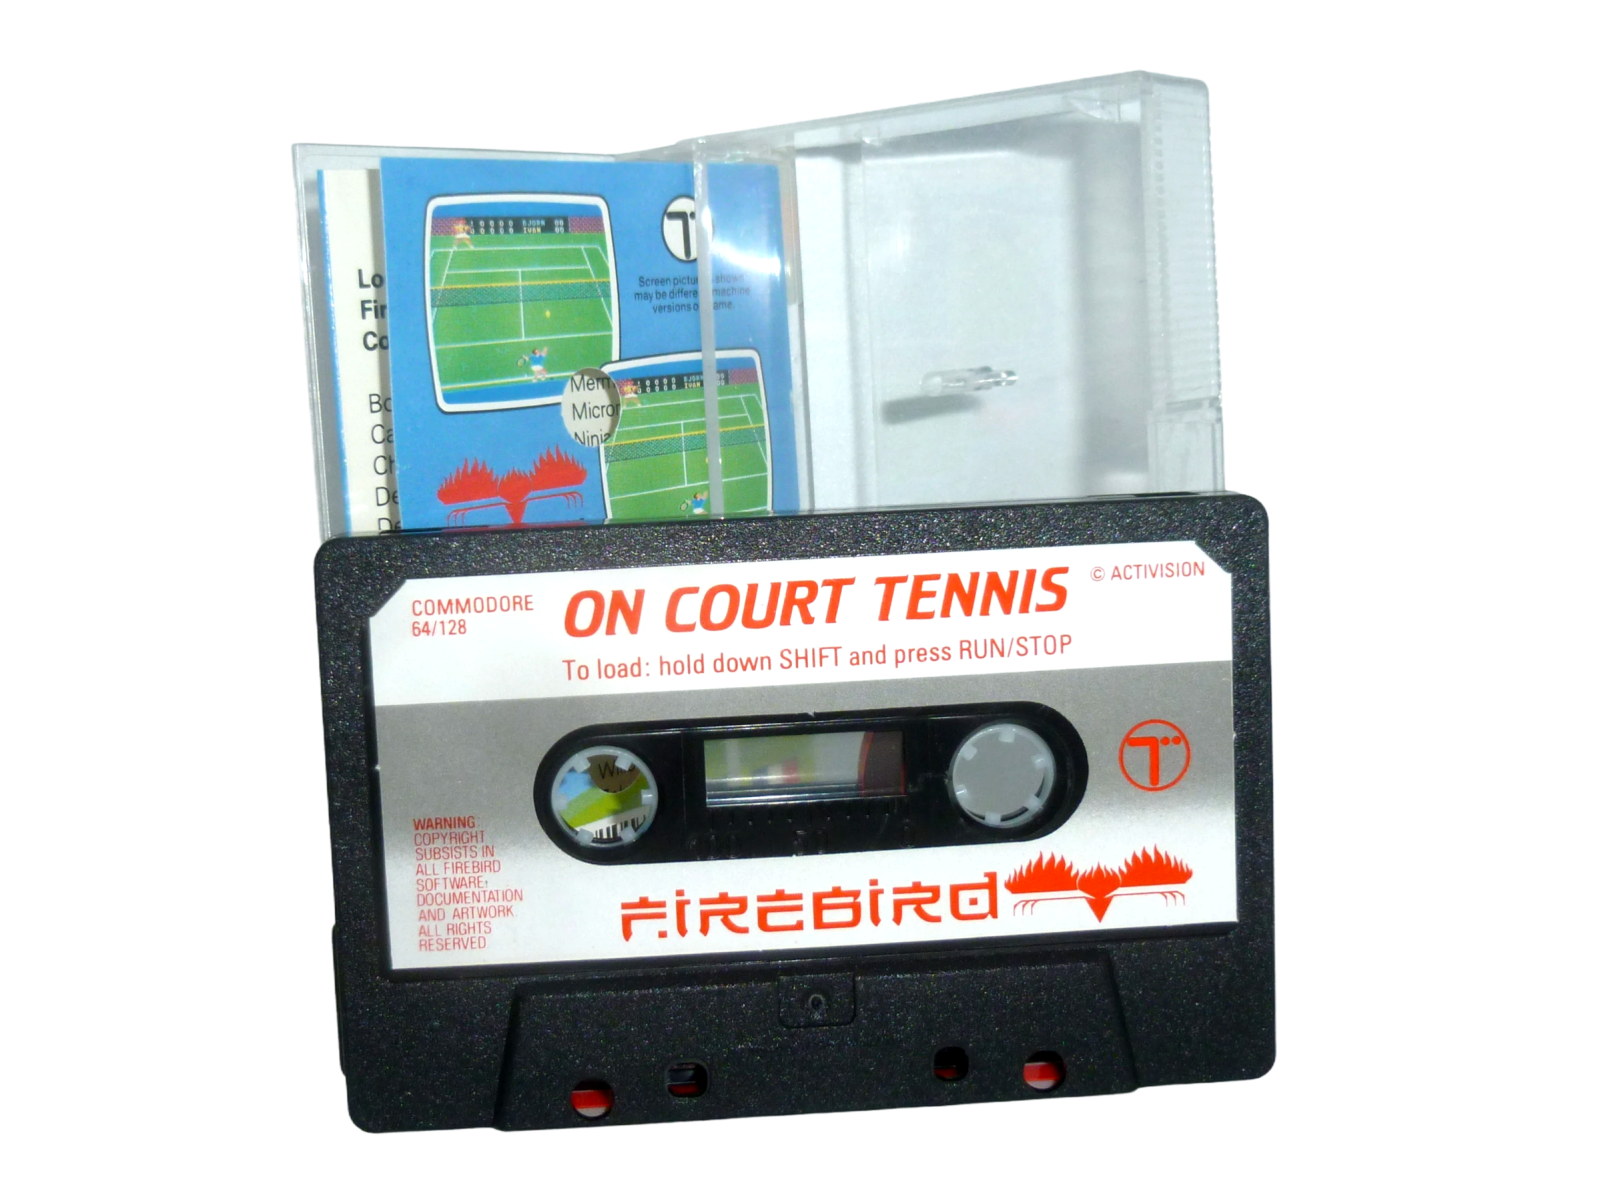 on court tennis - Kassette / Datasette Activision/Firebird 2